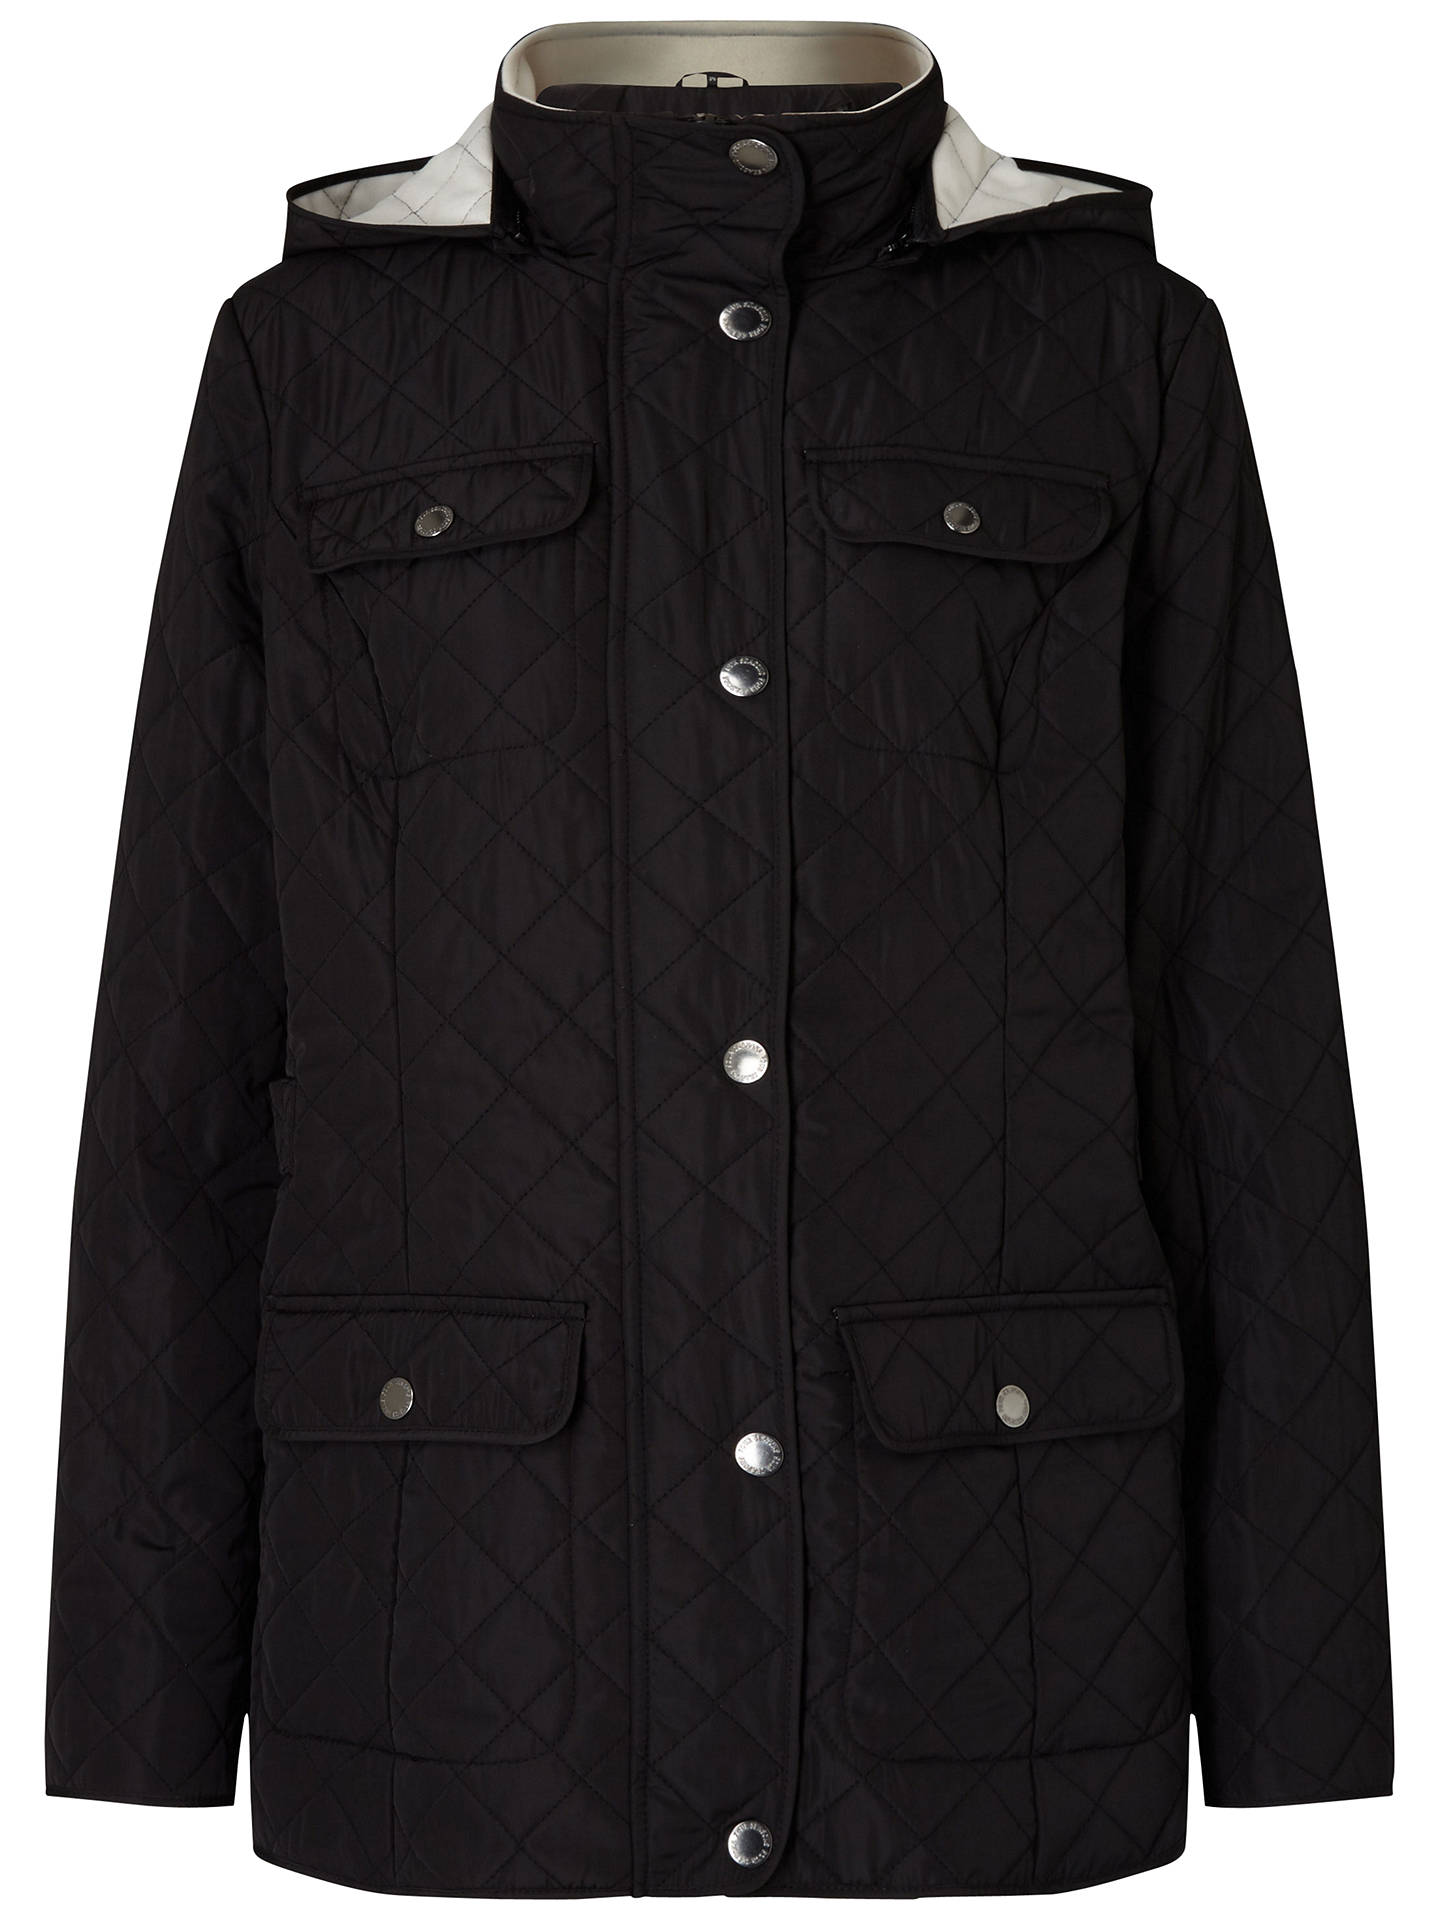 Four Seasons Polar Quilted Fleece Jacket at John Lewis & Partners